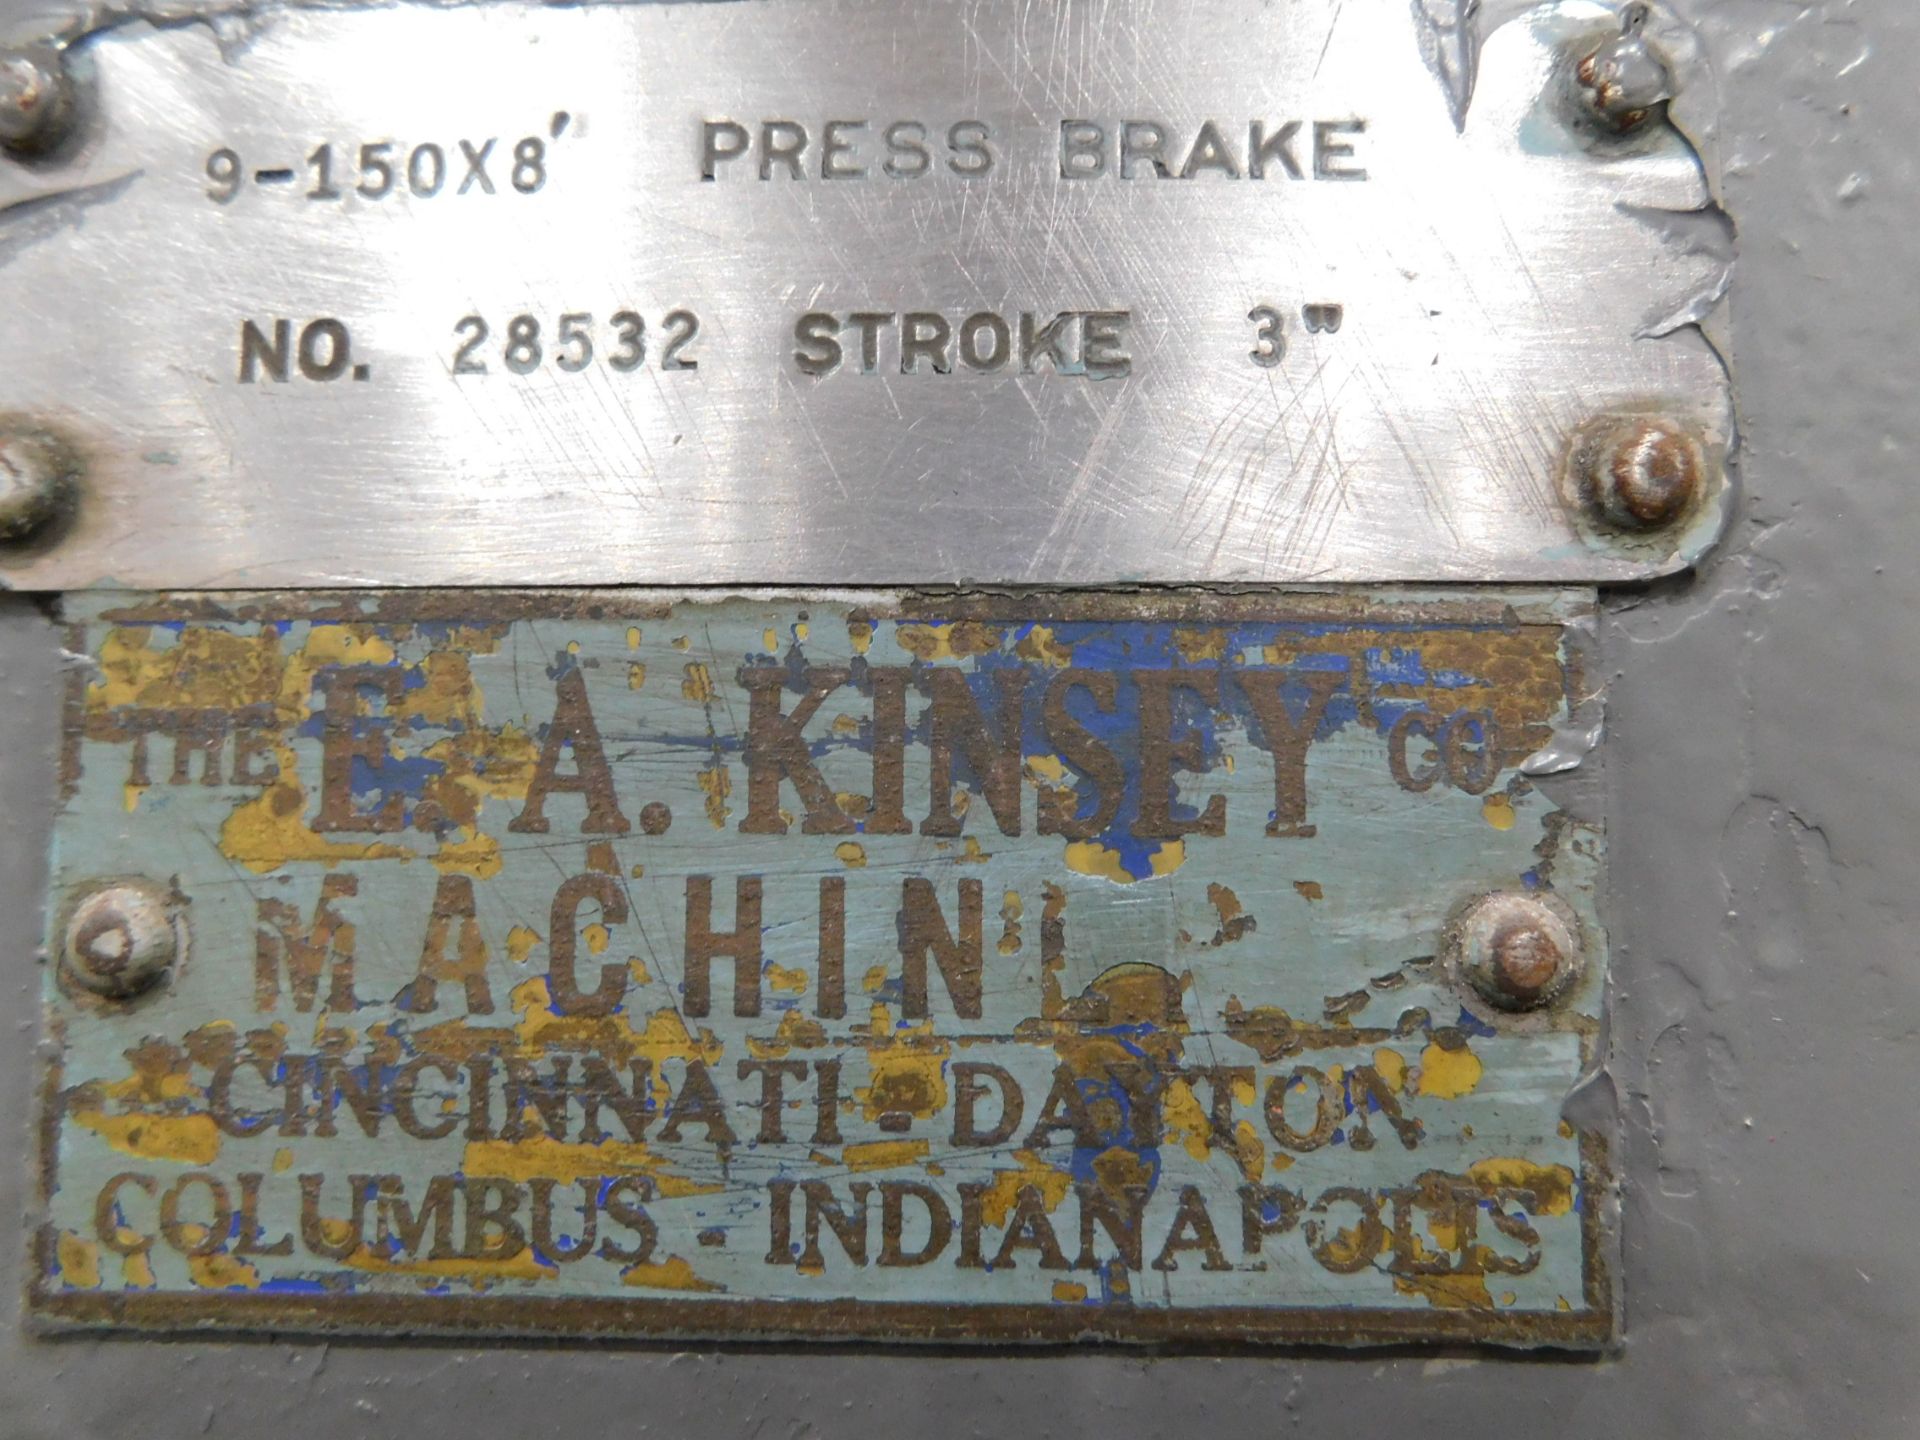 Cincinnati Series 4, Model 9-150 X 8 Mechanical Press Brake, s/n 28532, 225 Tons at Bottom of - Image 7 of 7